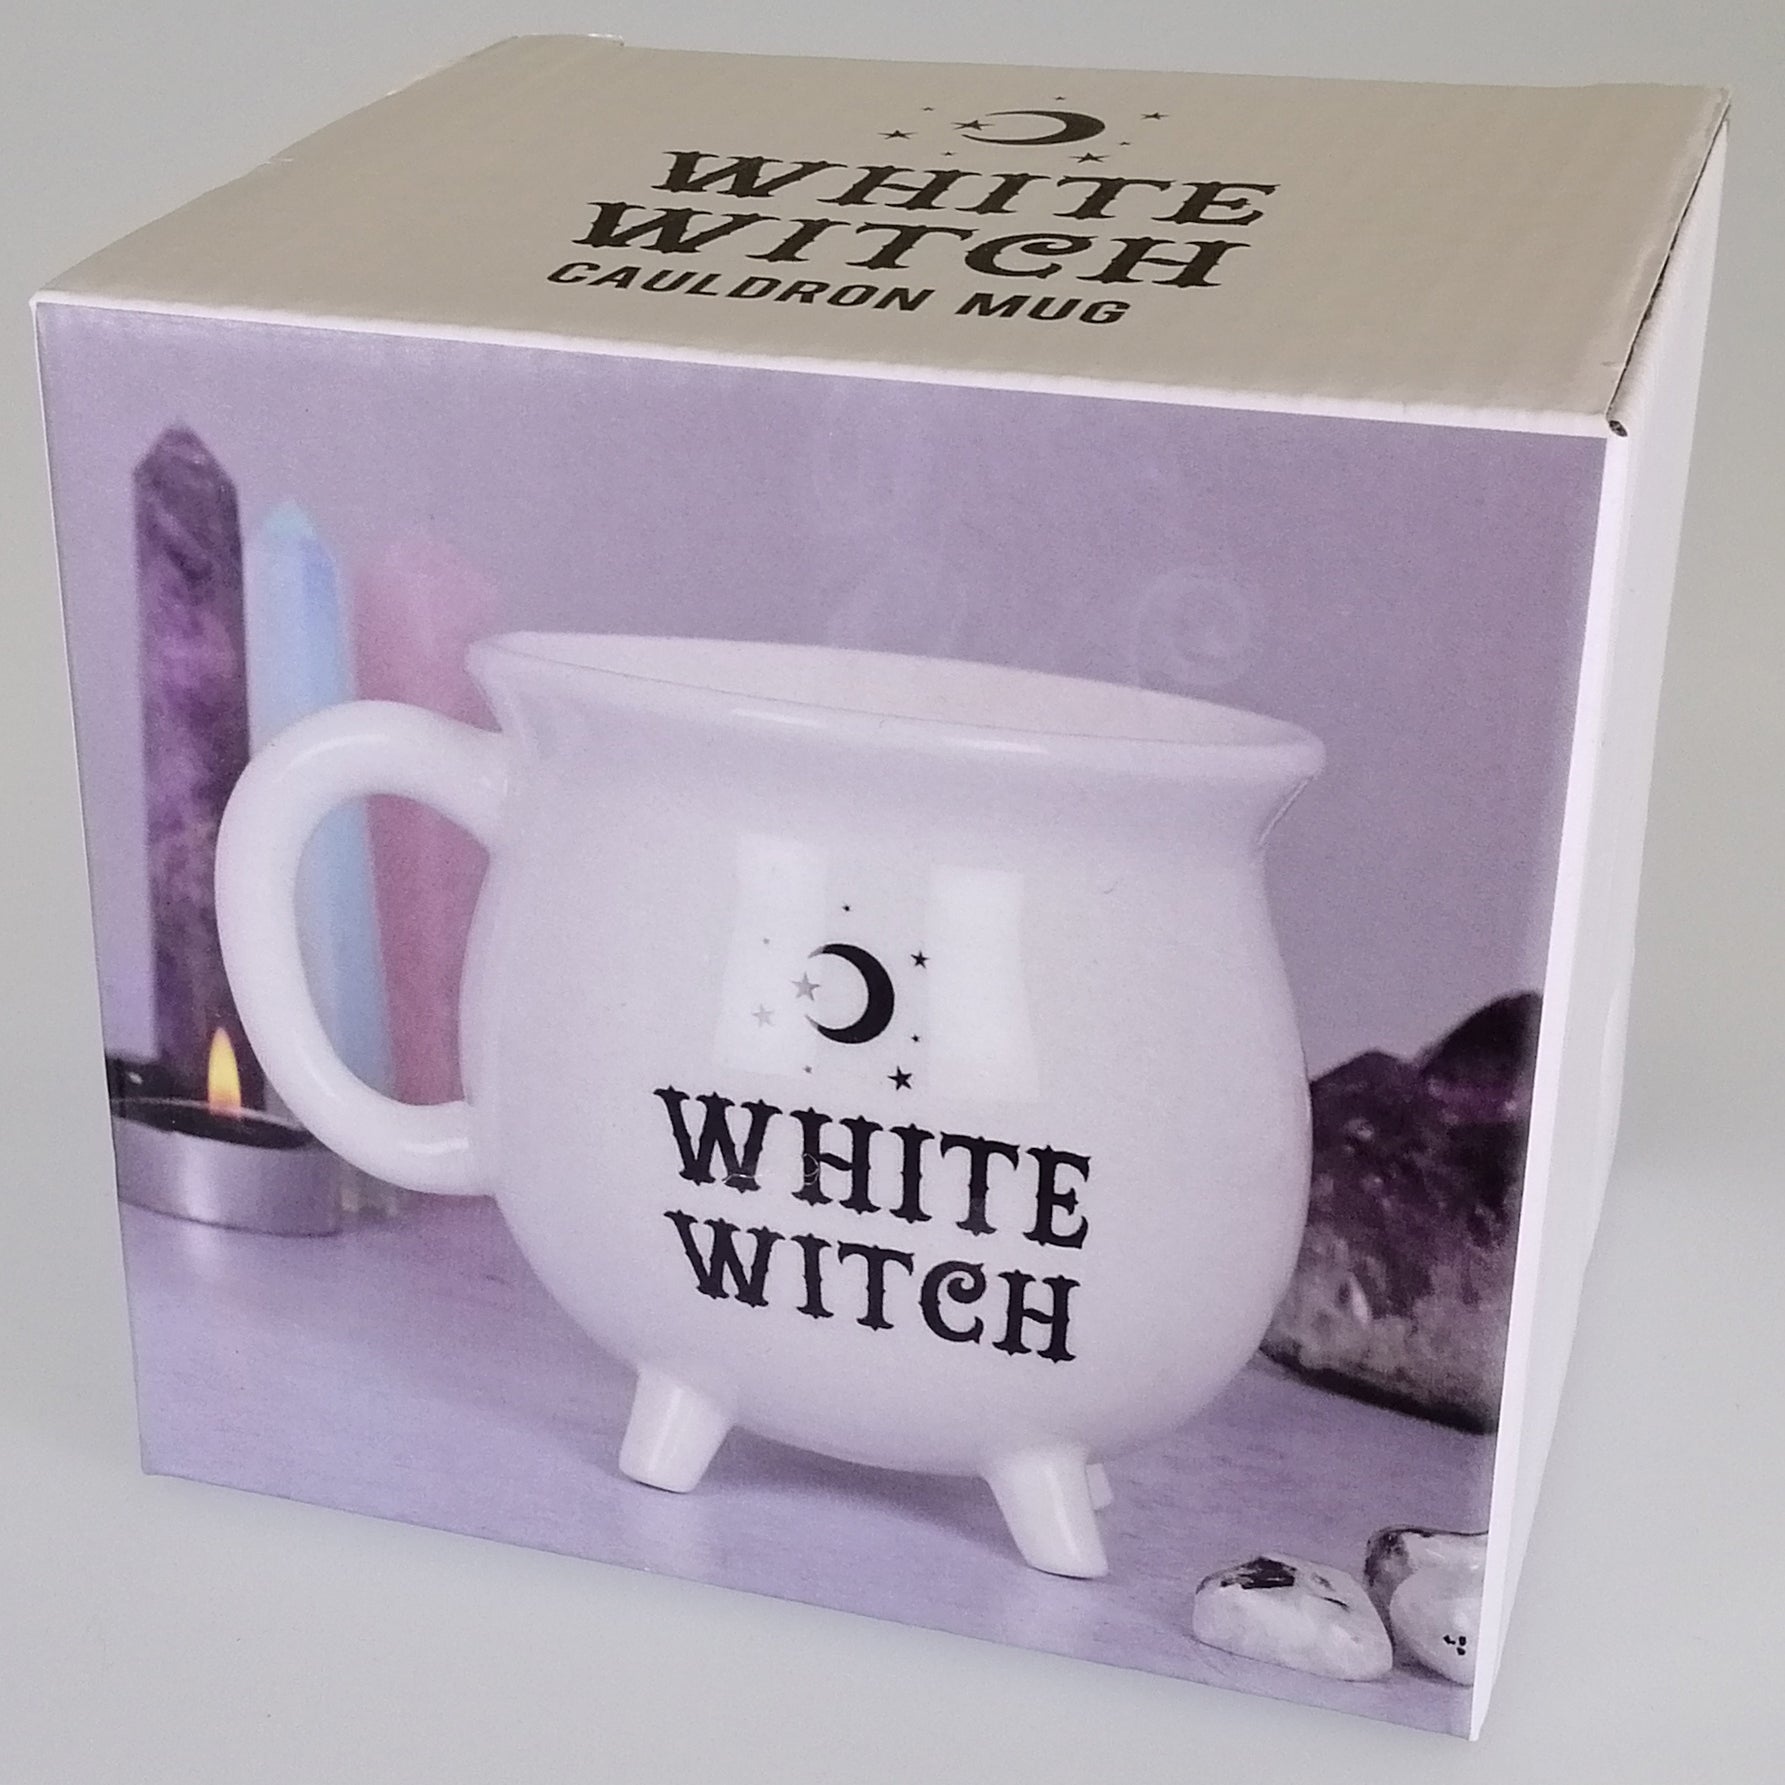 White Witch' - Cauldron Coffee or Tea Mug